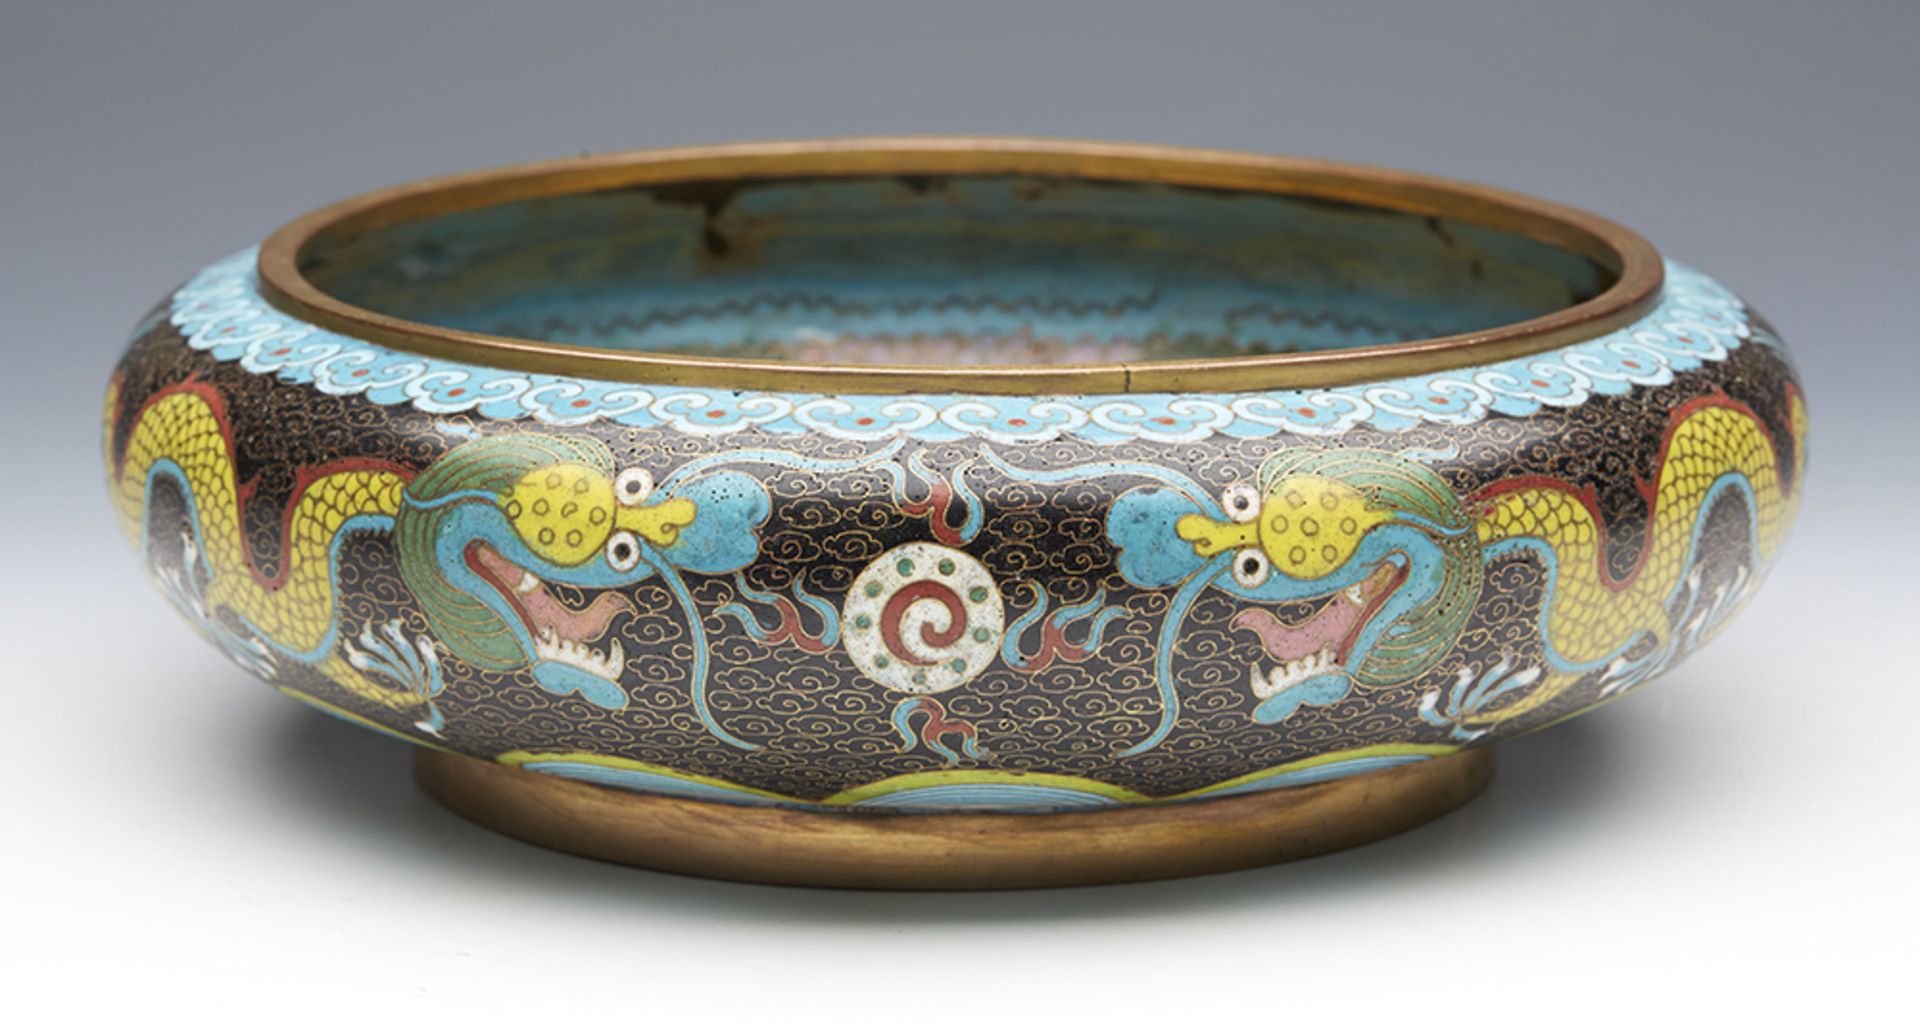 Antique Chinese Tongzhi Mark Cloisonne Dragon Bowl 1862-74